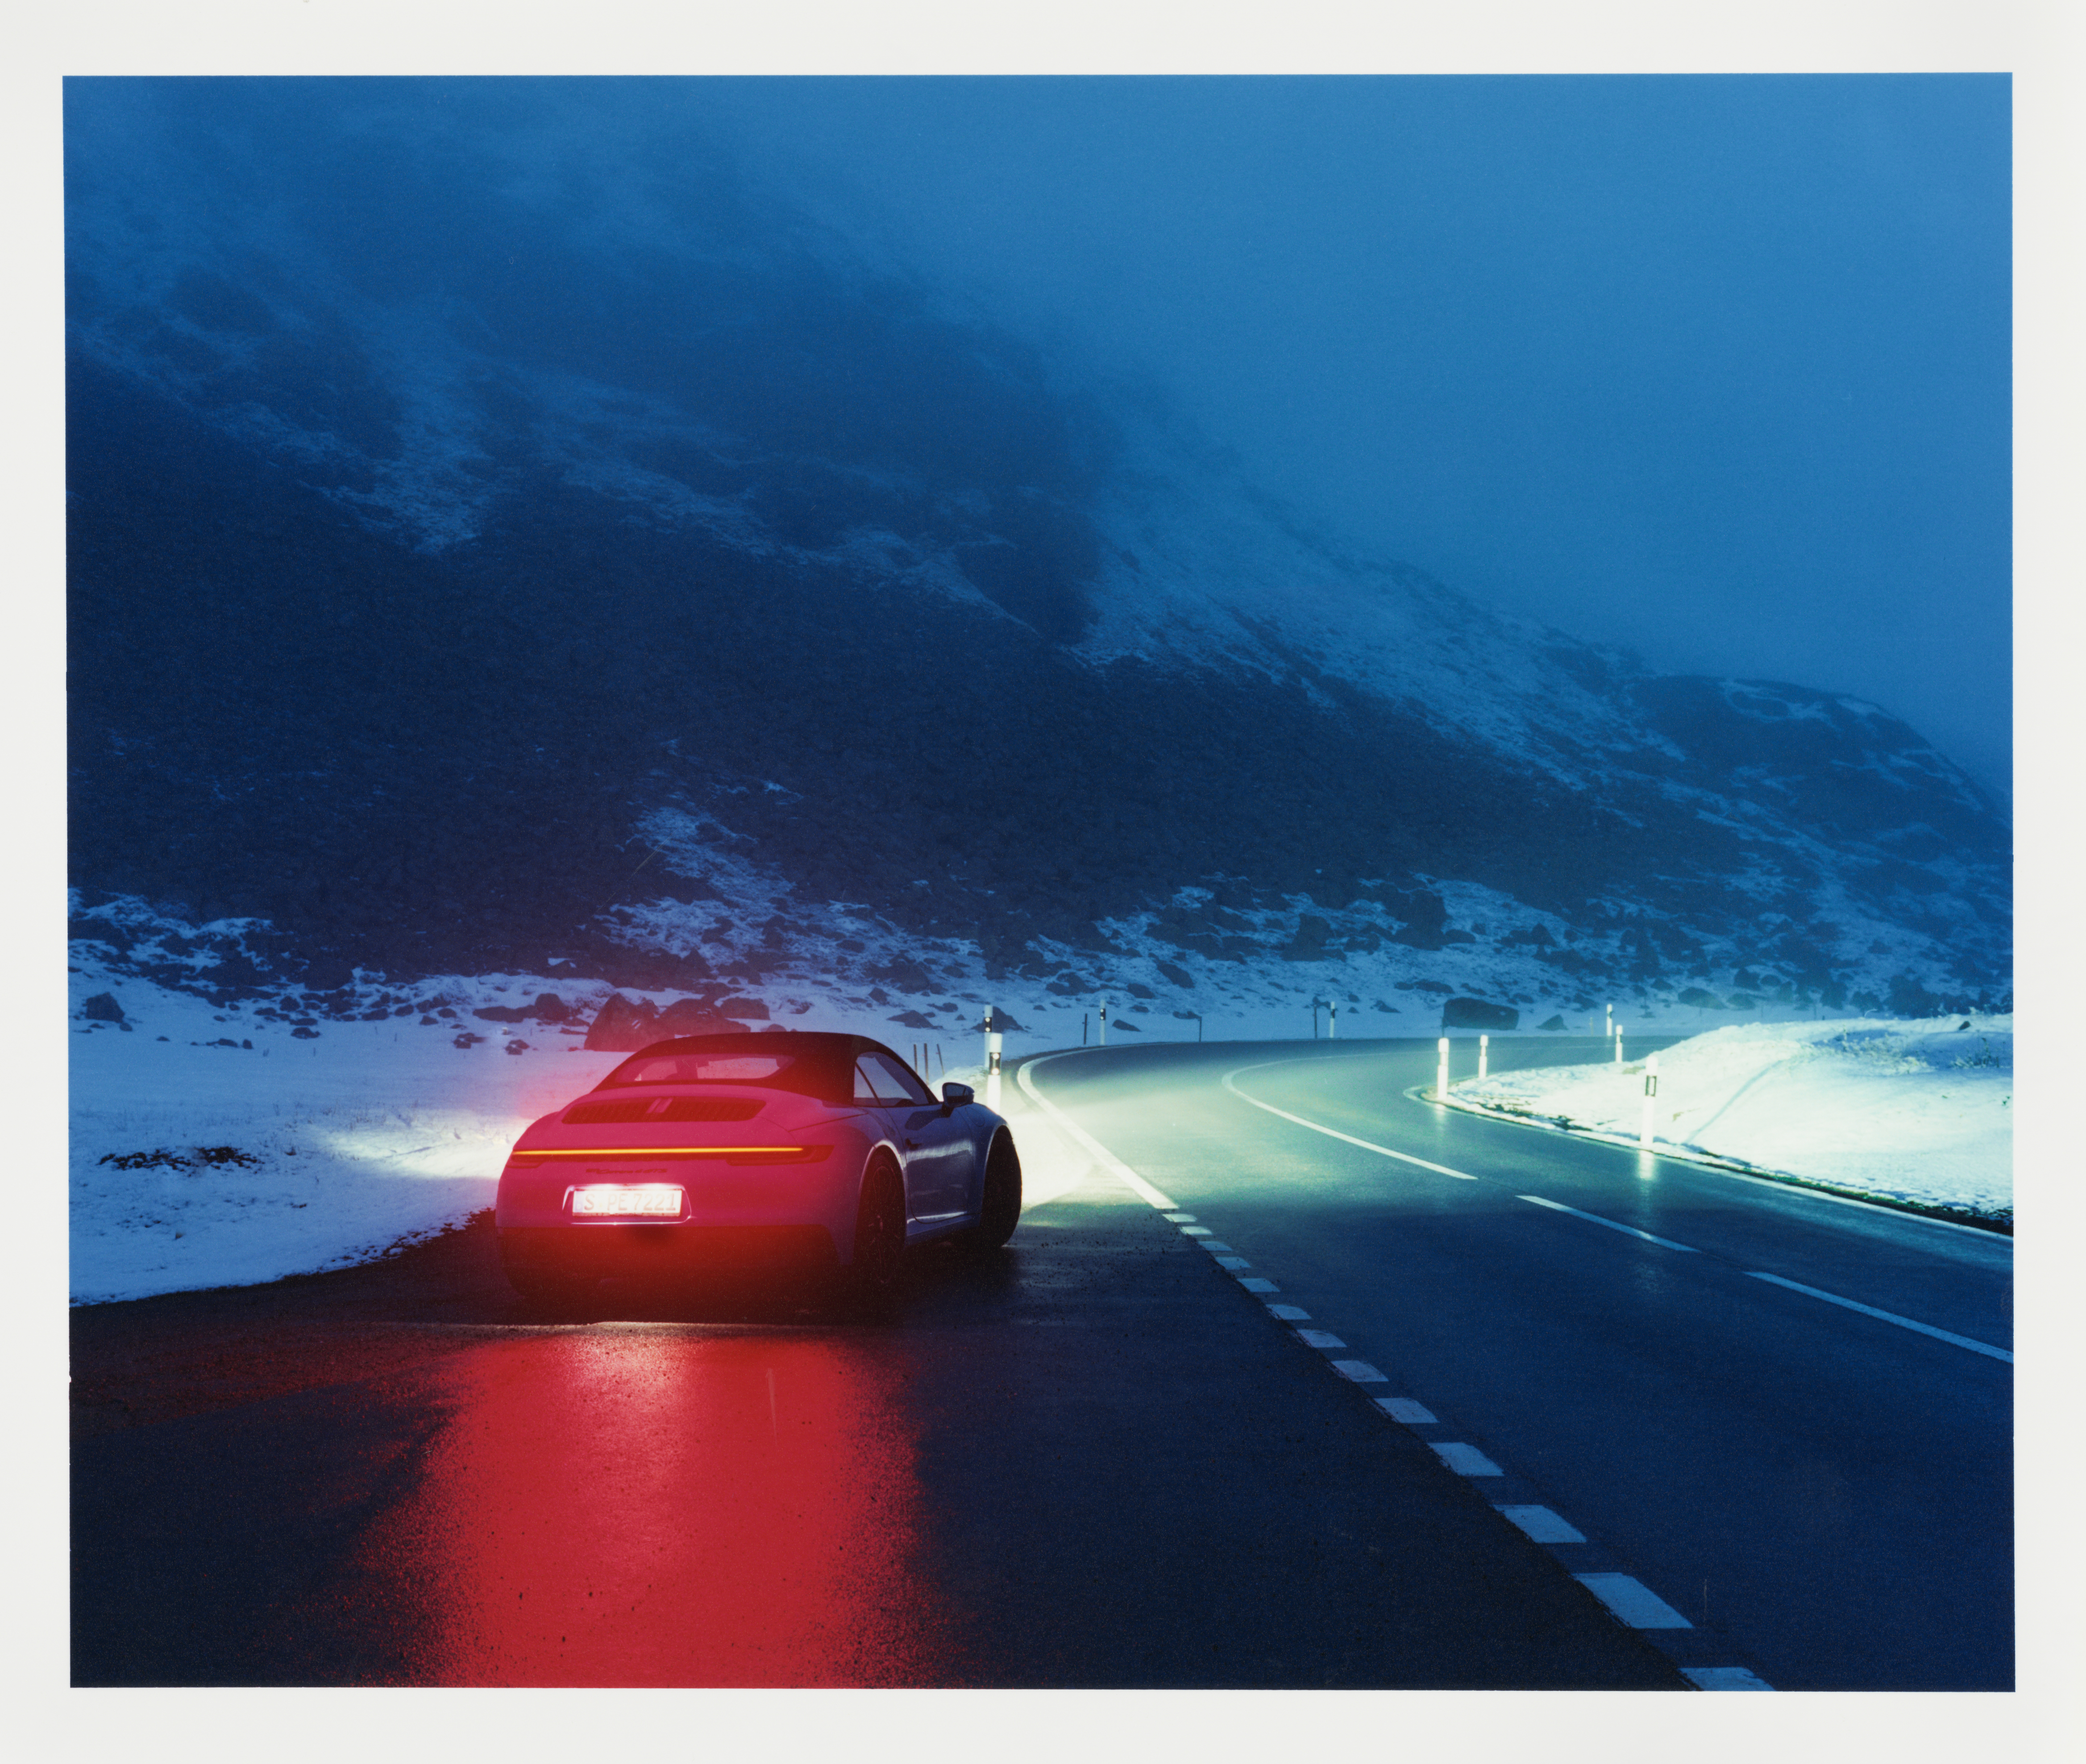 Porsche 911 Carrera 4 GTS Cabriolet on dark, icy road